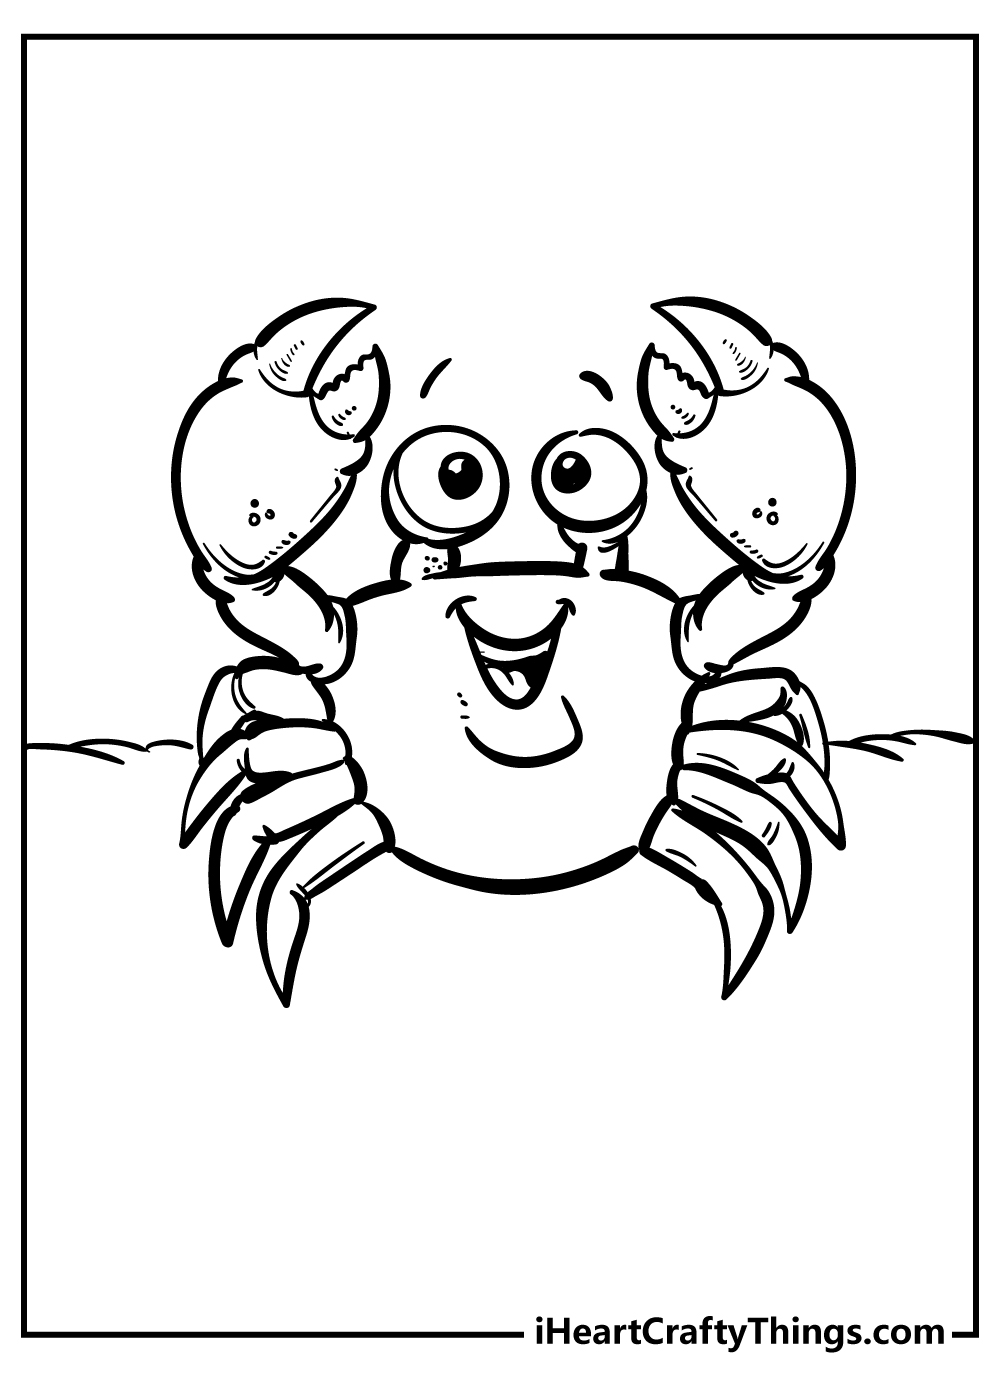 Crab Coloring Original Sheet for children free download